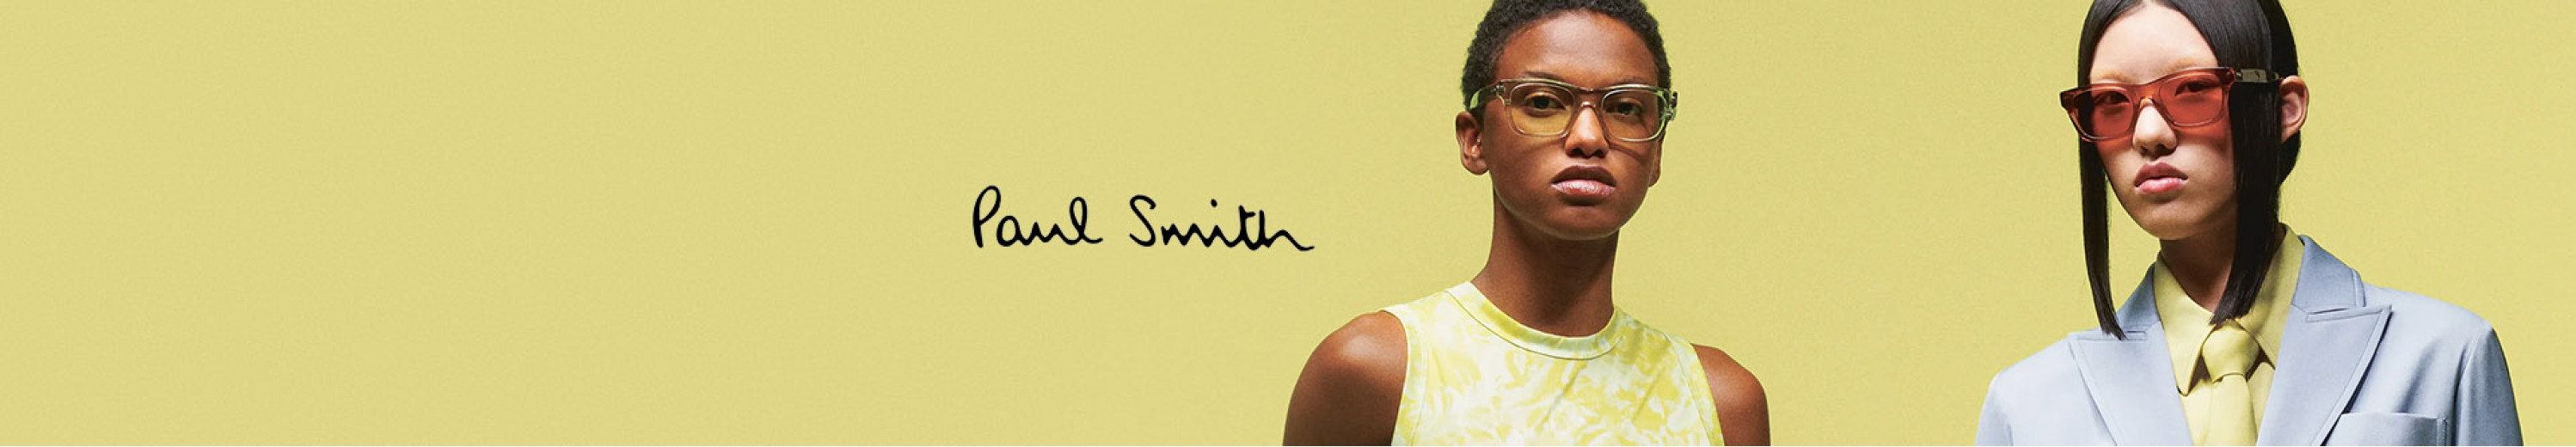 Paul Smith Glasses and Eyewear